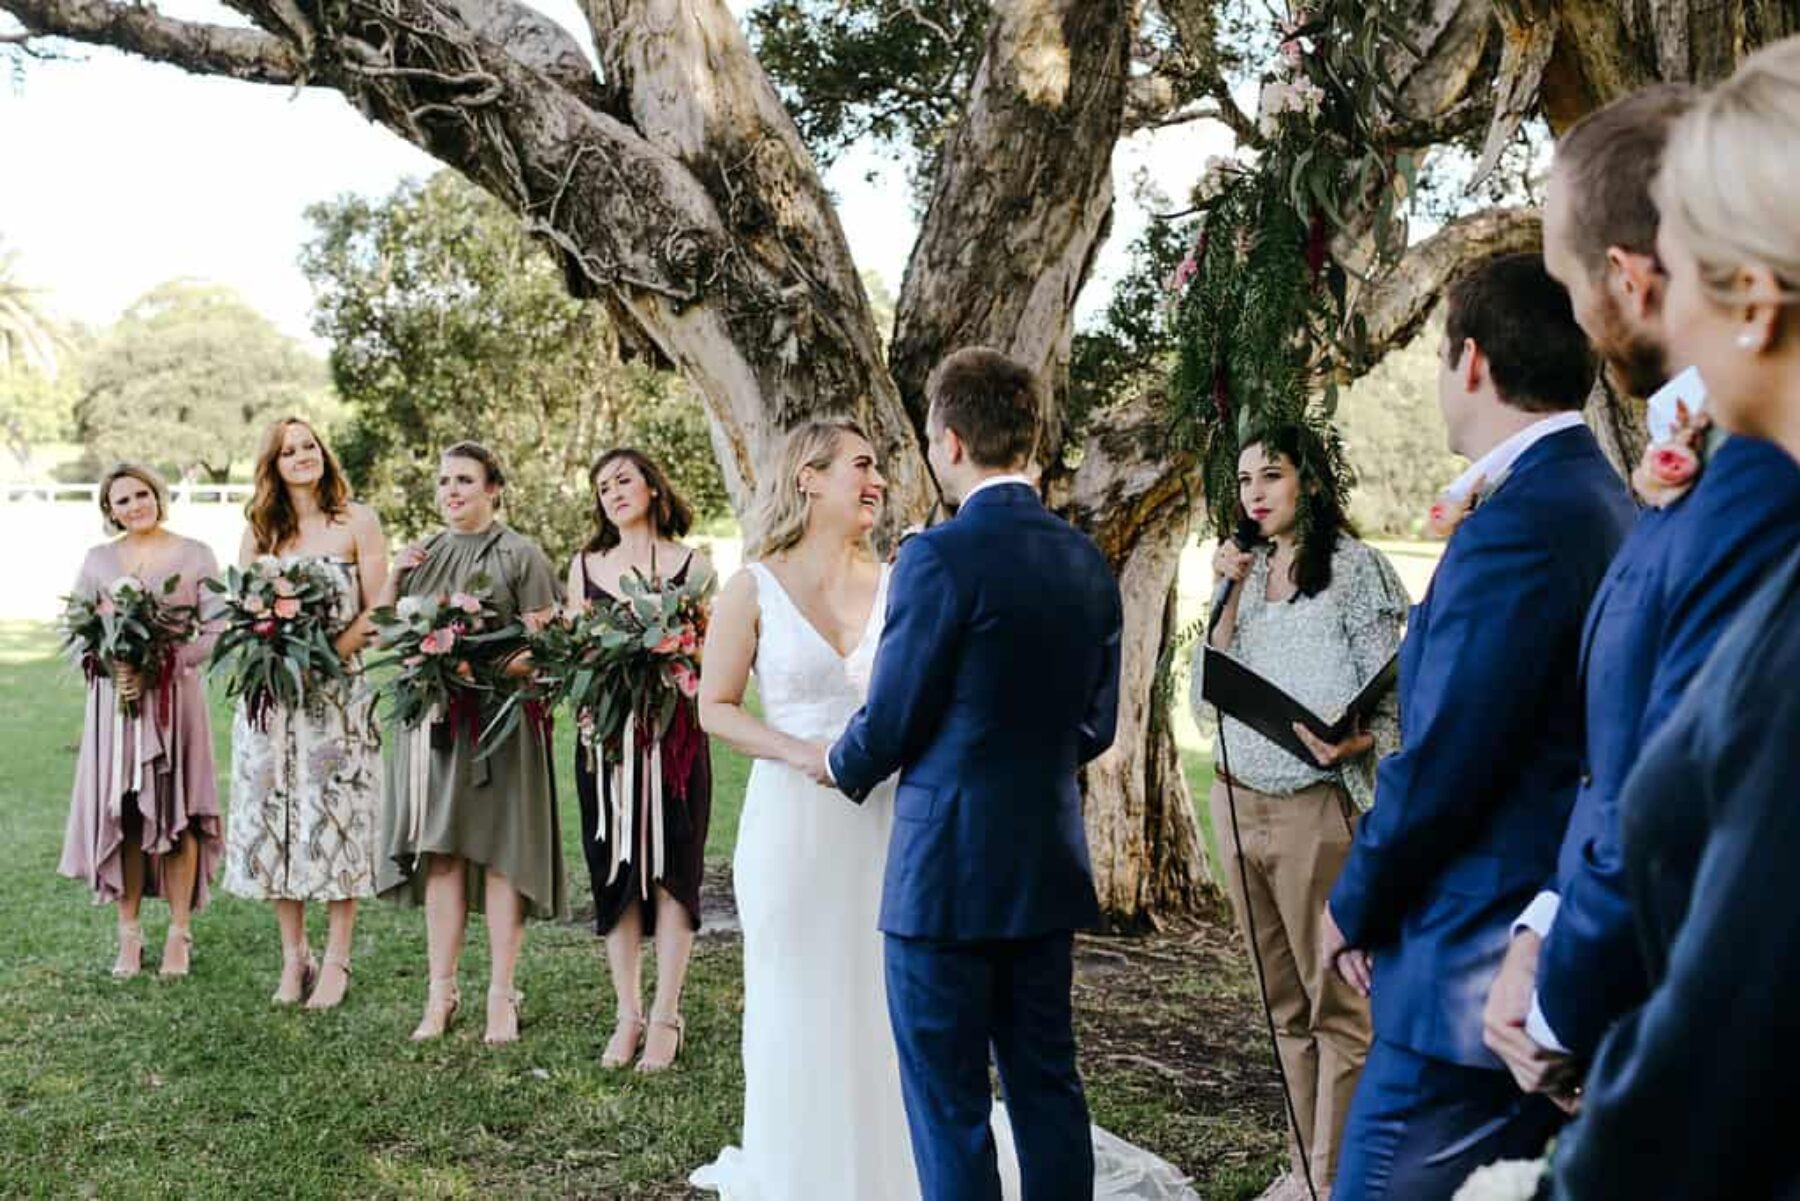 Sydney Centennial Park wedding by Lara Hotz photography